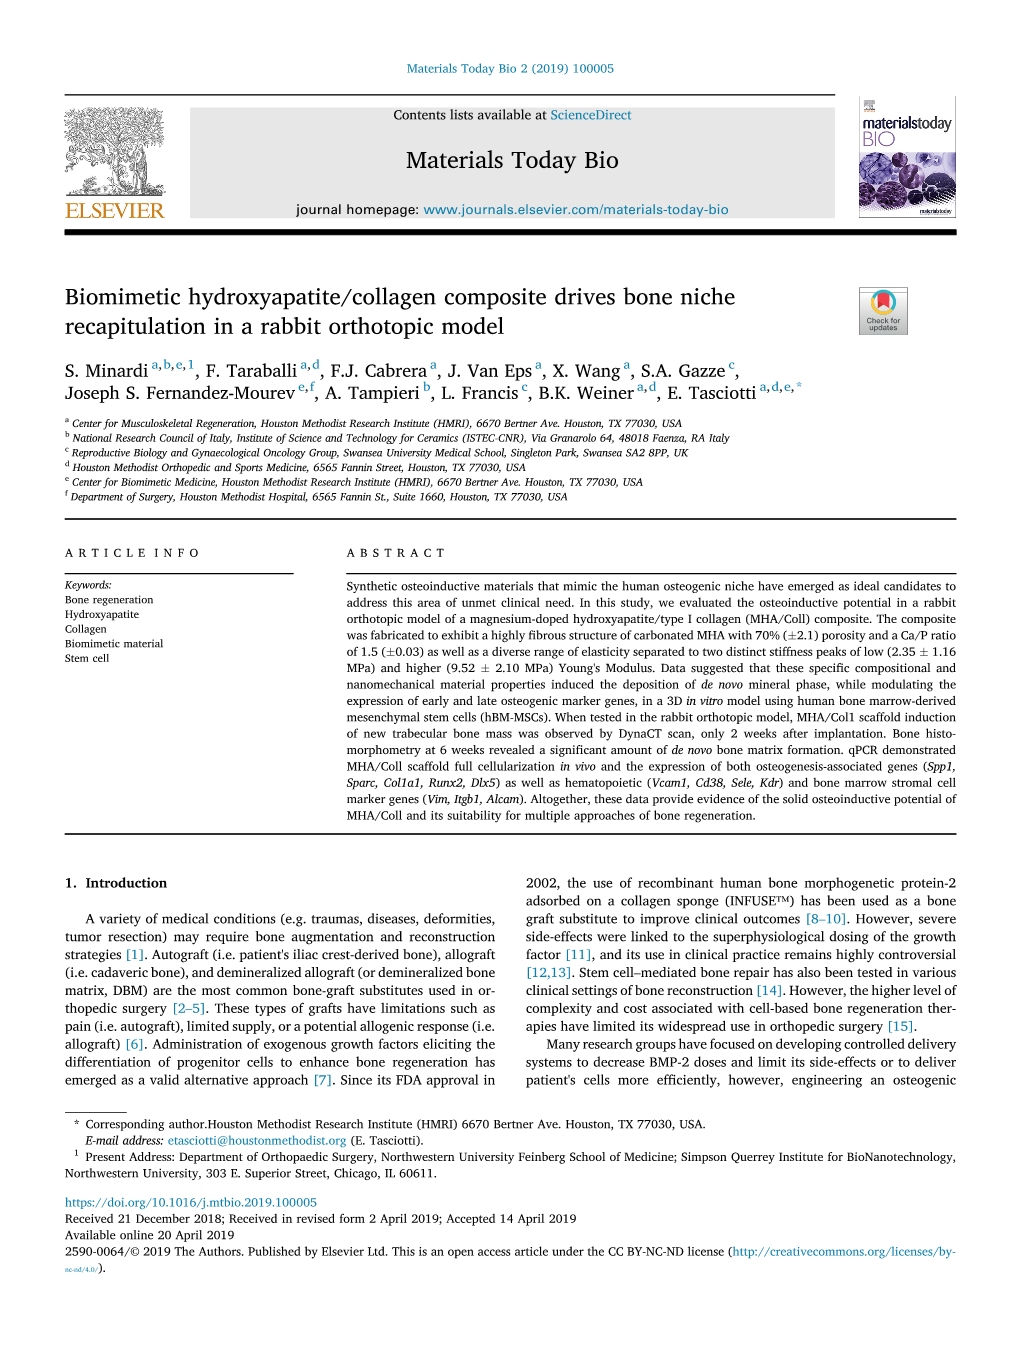 Biomimetic Hydroxyapatite/Collagen Composite Drives Bone Niche Recapitulation in a Rabbit Orthotopic Model